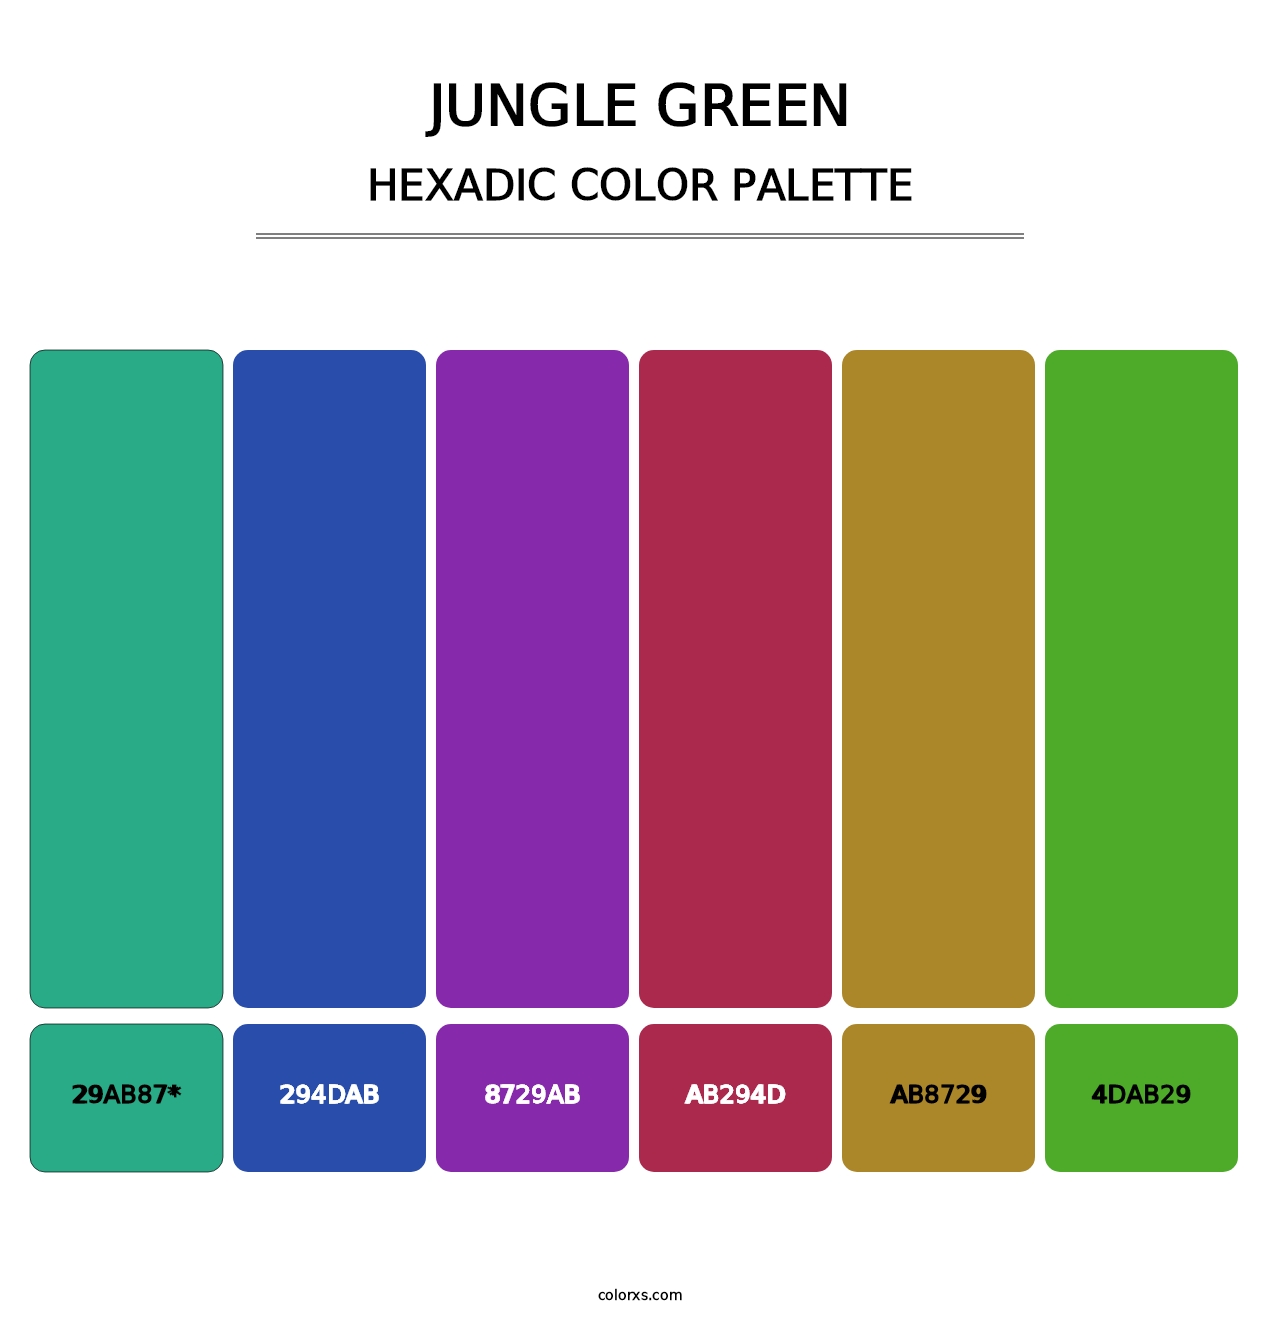 Jungle Green - Hexadic Color Palette